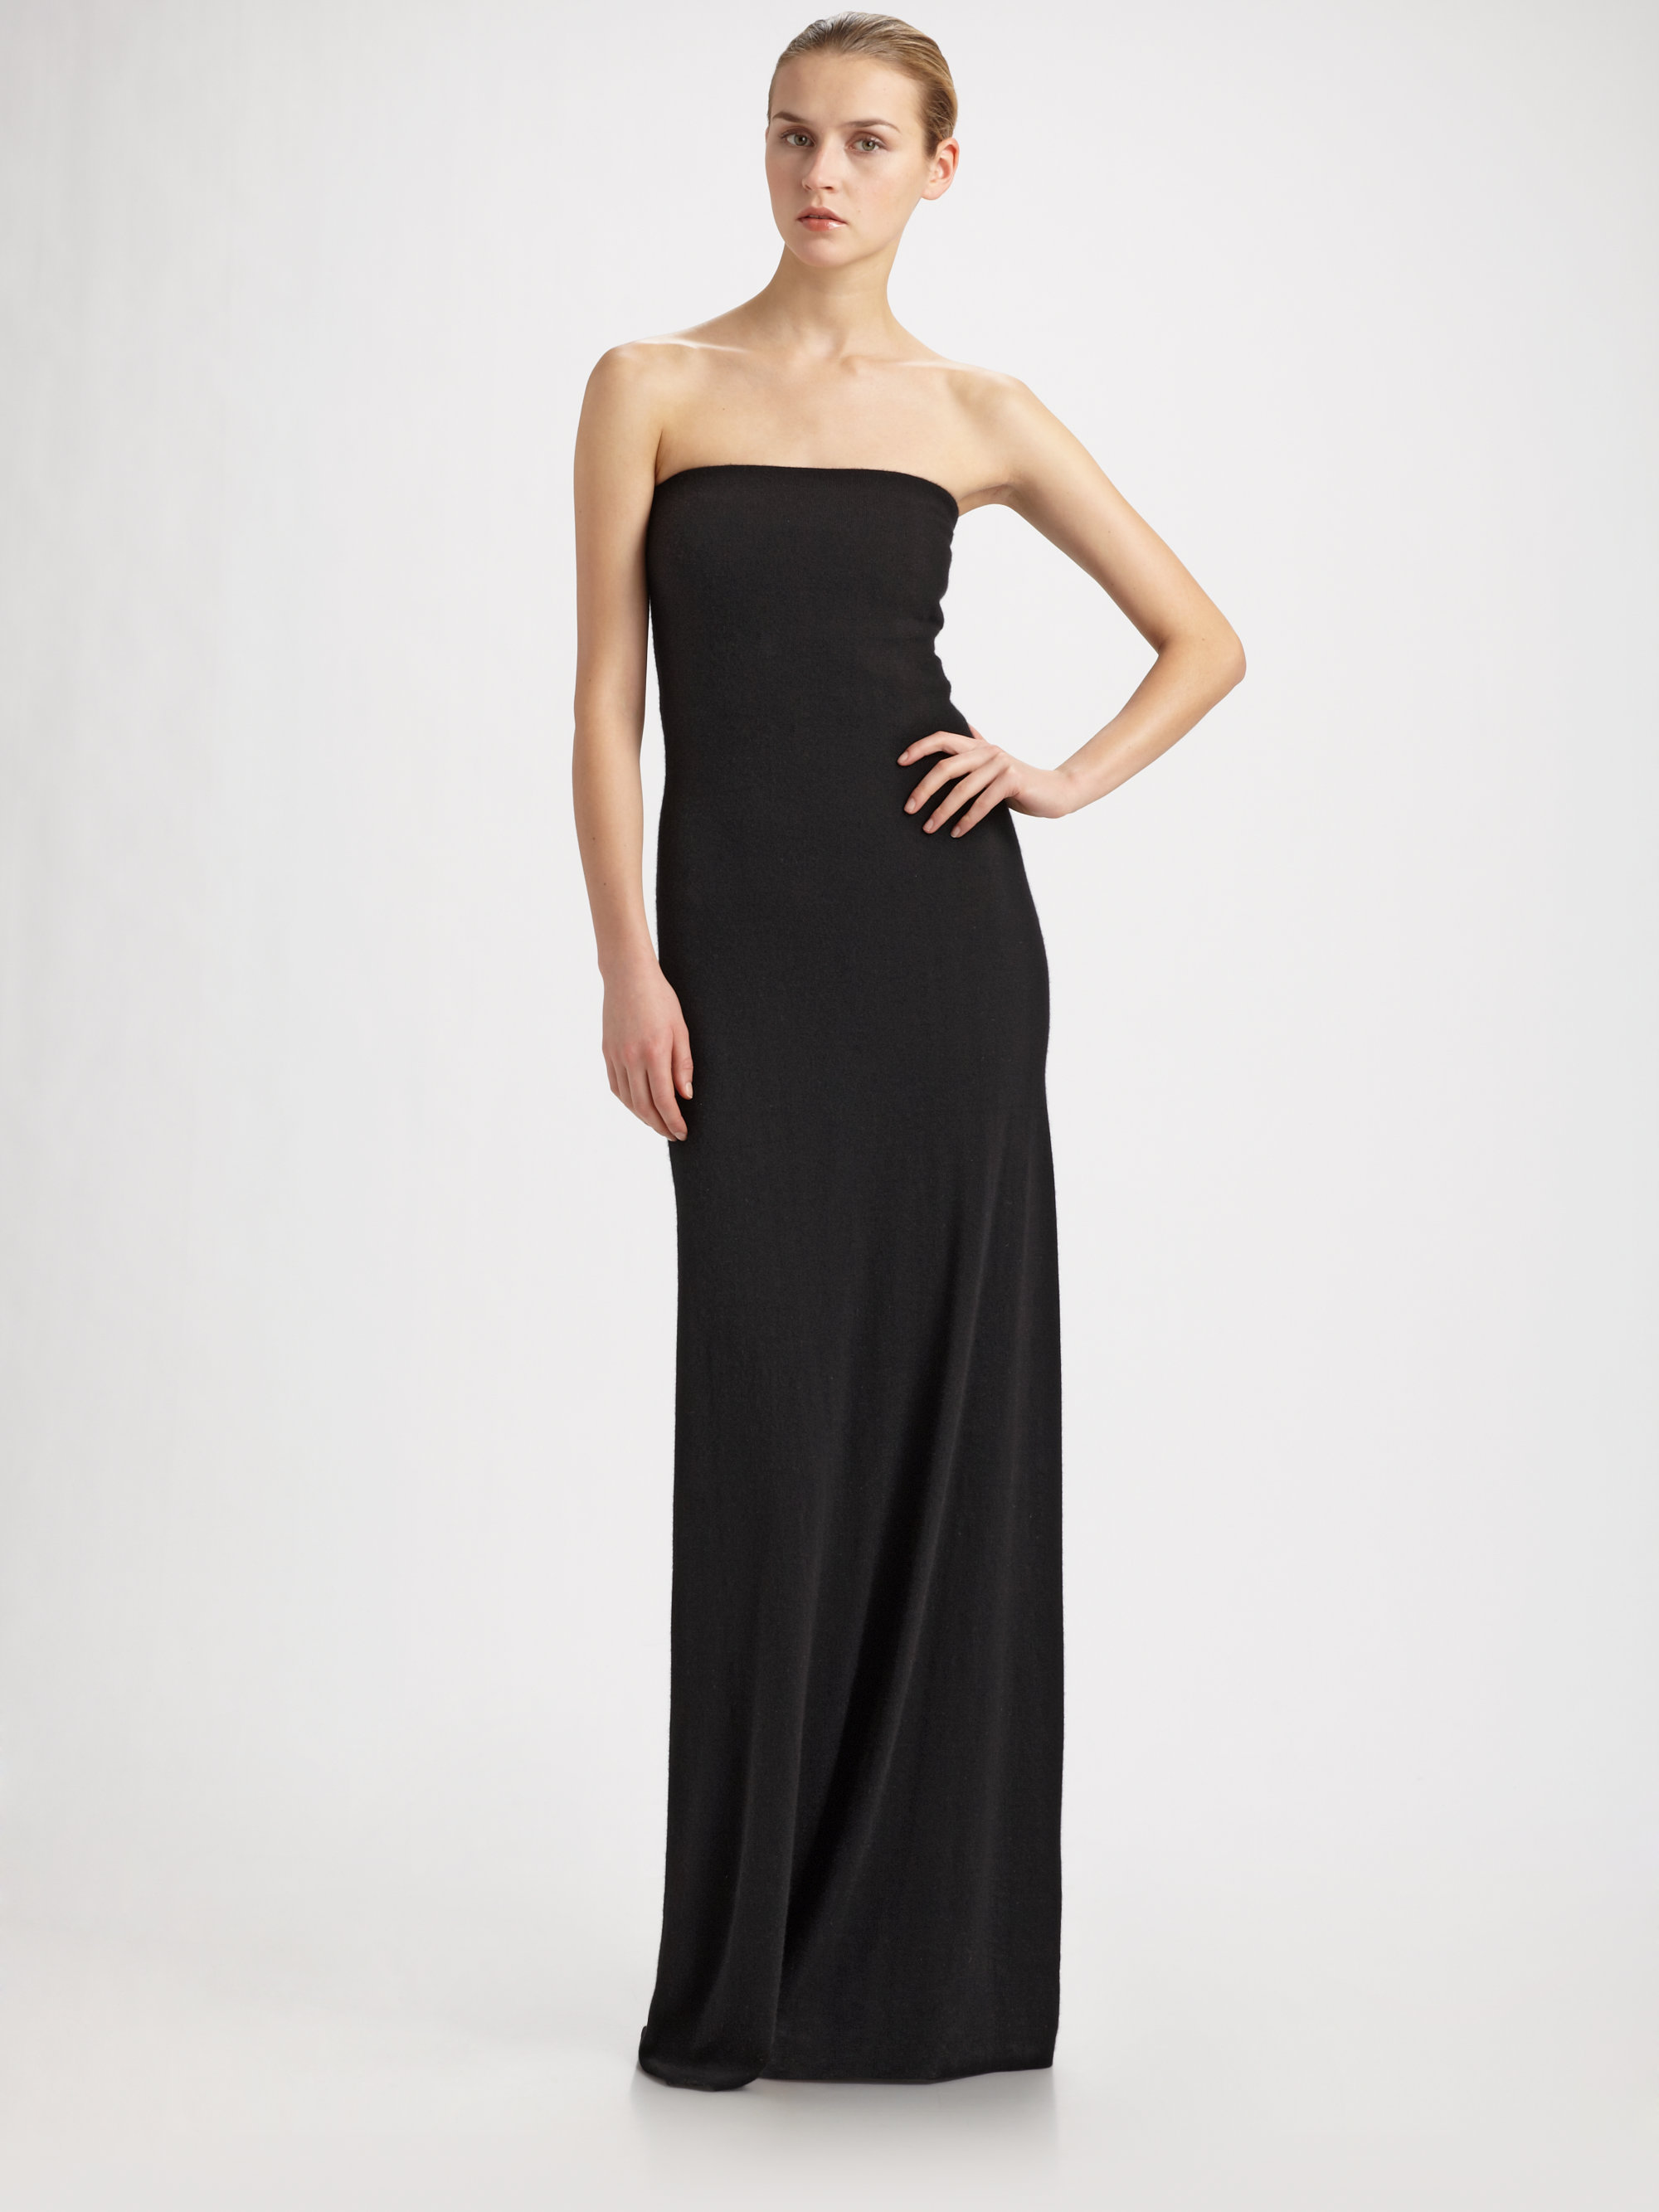 Ralph Lauren Collection Strapless Cashmere Gown in Black | Lyst